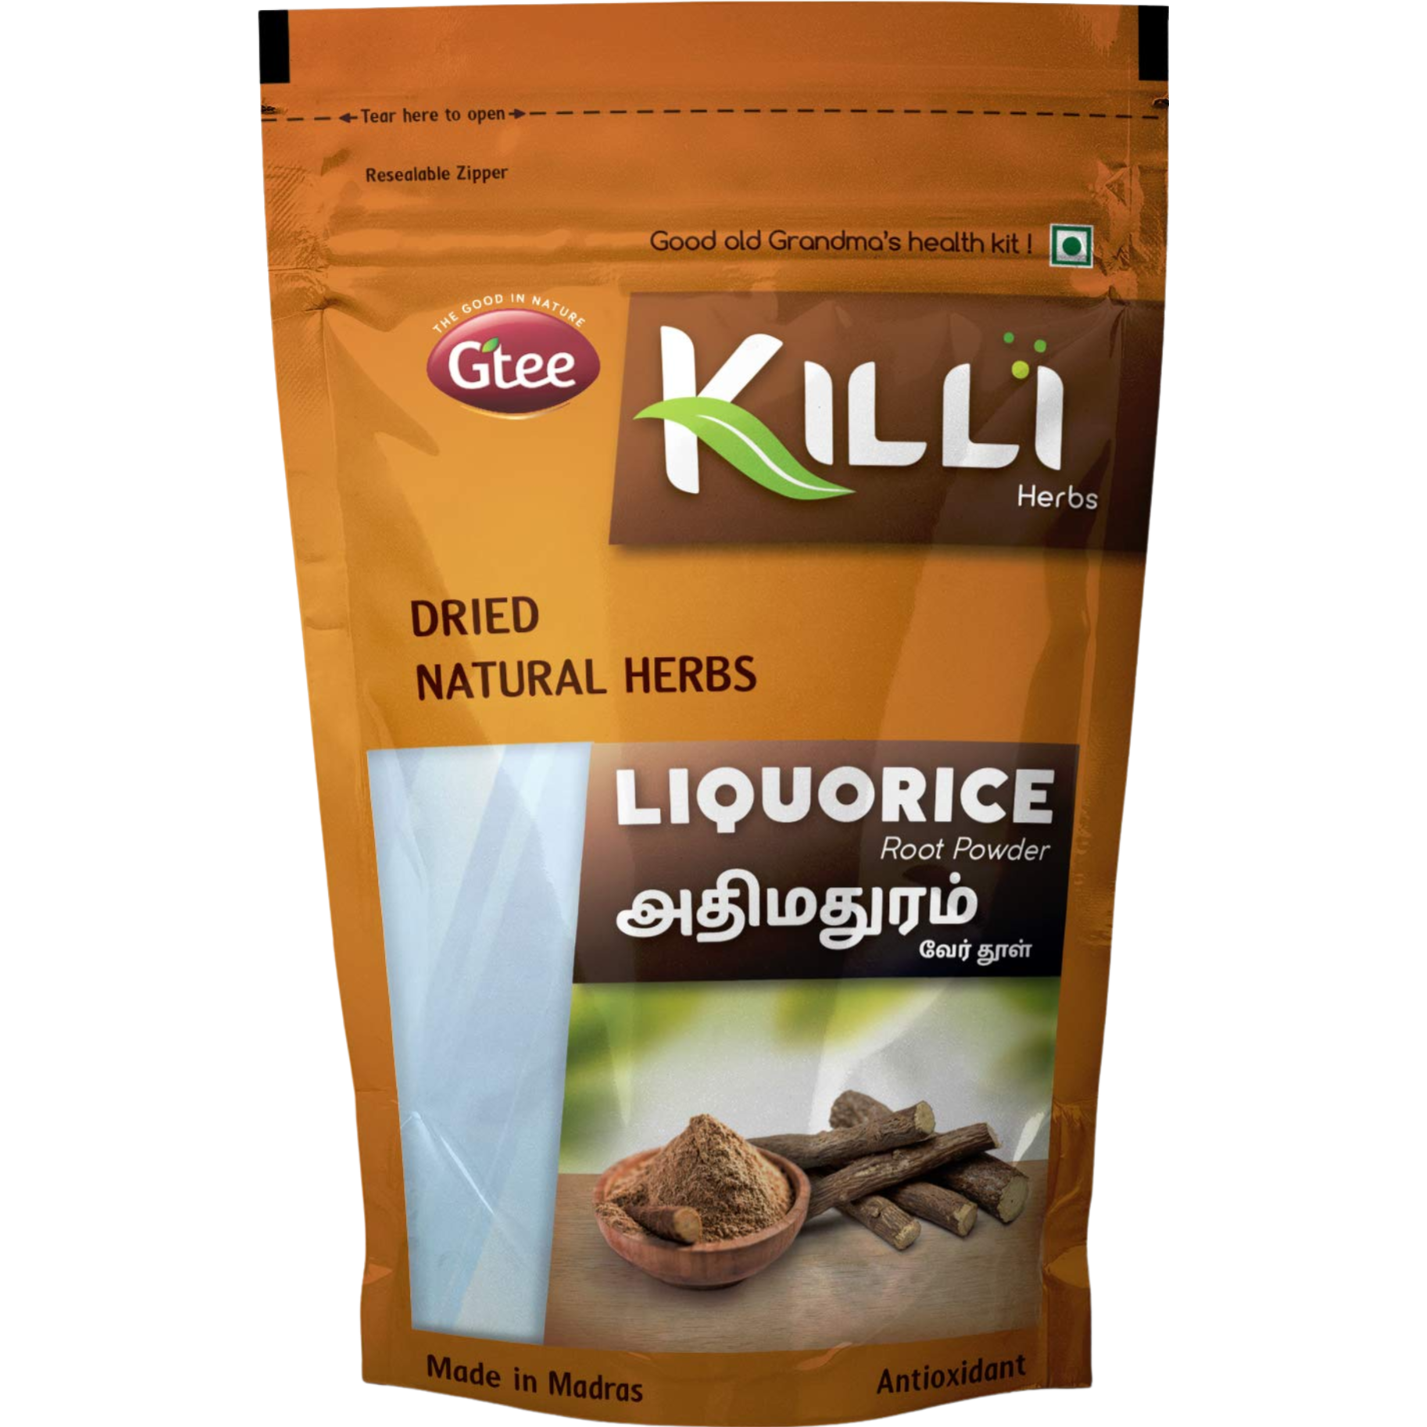 Case of 1 - Gtee Killi Liquorice Natural Herb - 100 Gm (3.5 Oz)